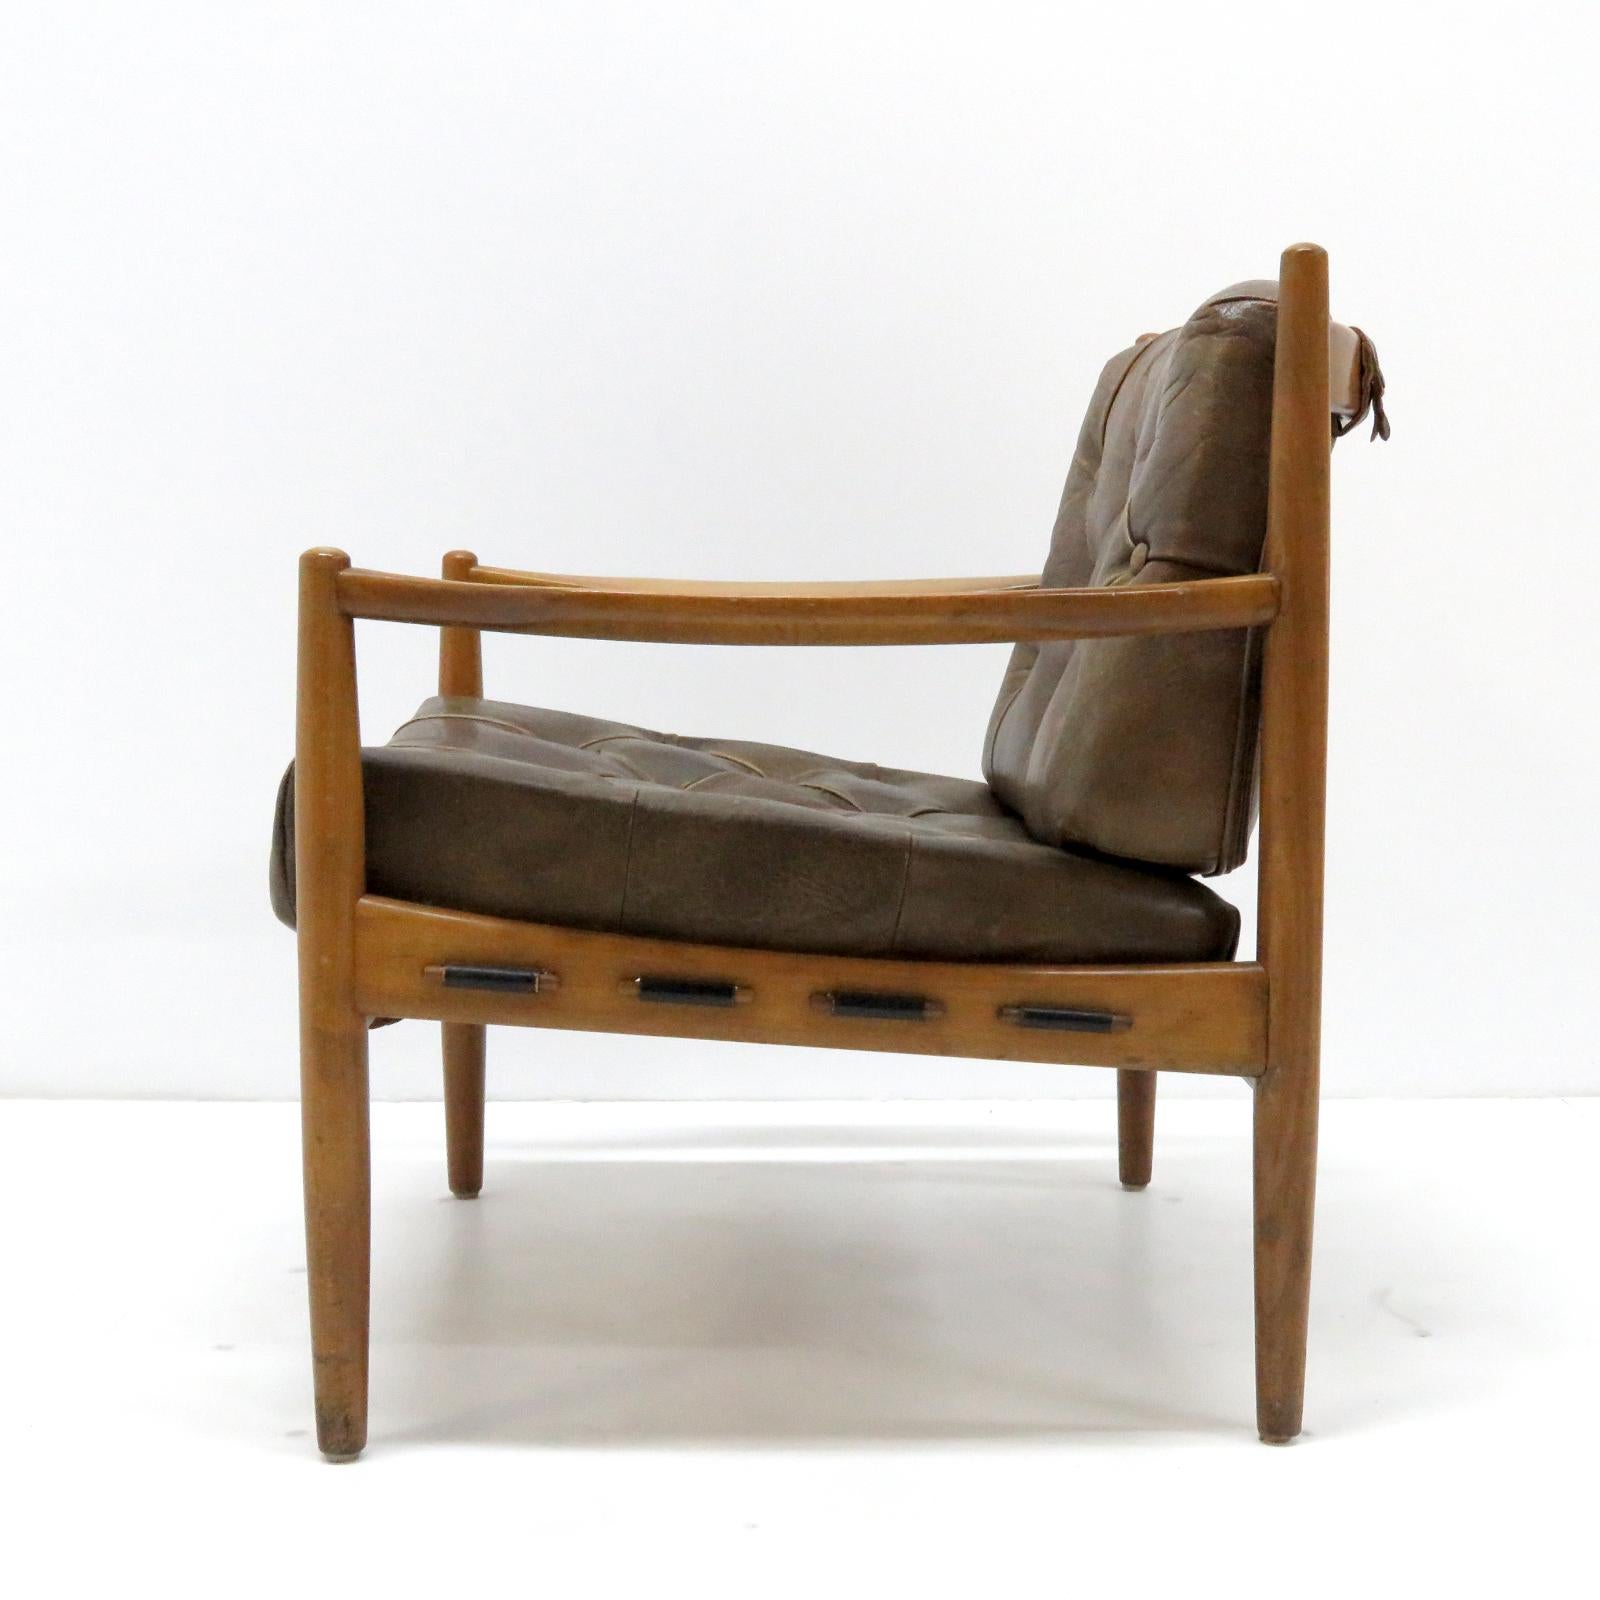 Swedish Ingemar Thillmark 'Läckö' Chair, 1950